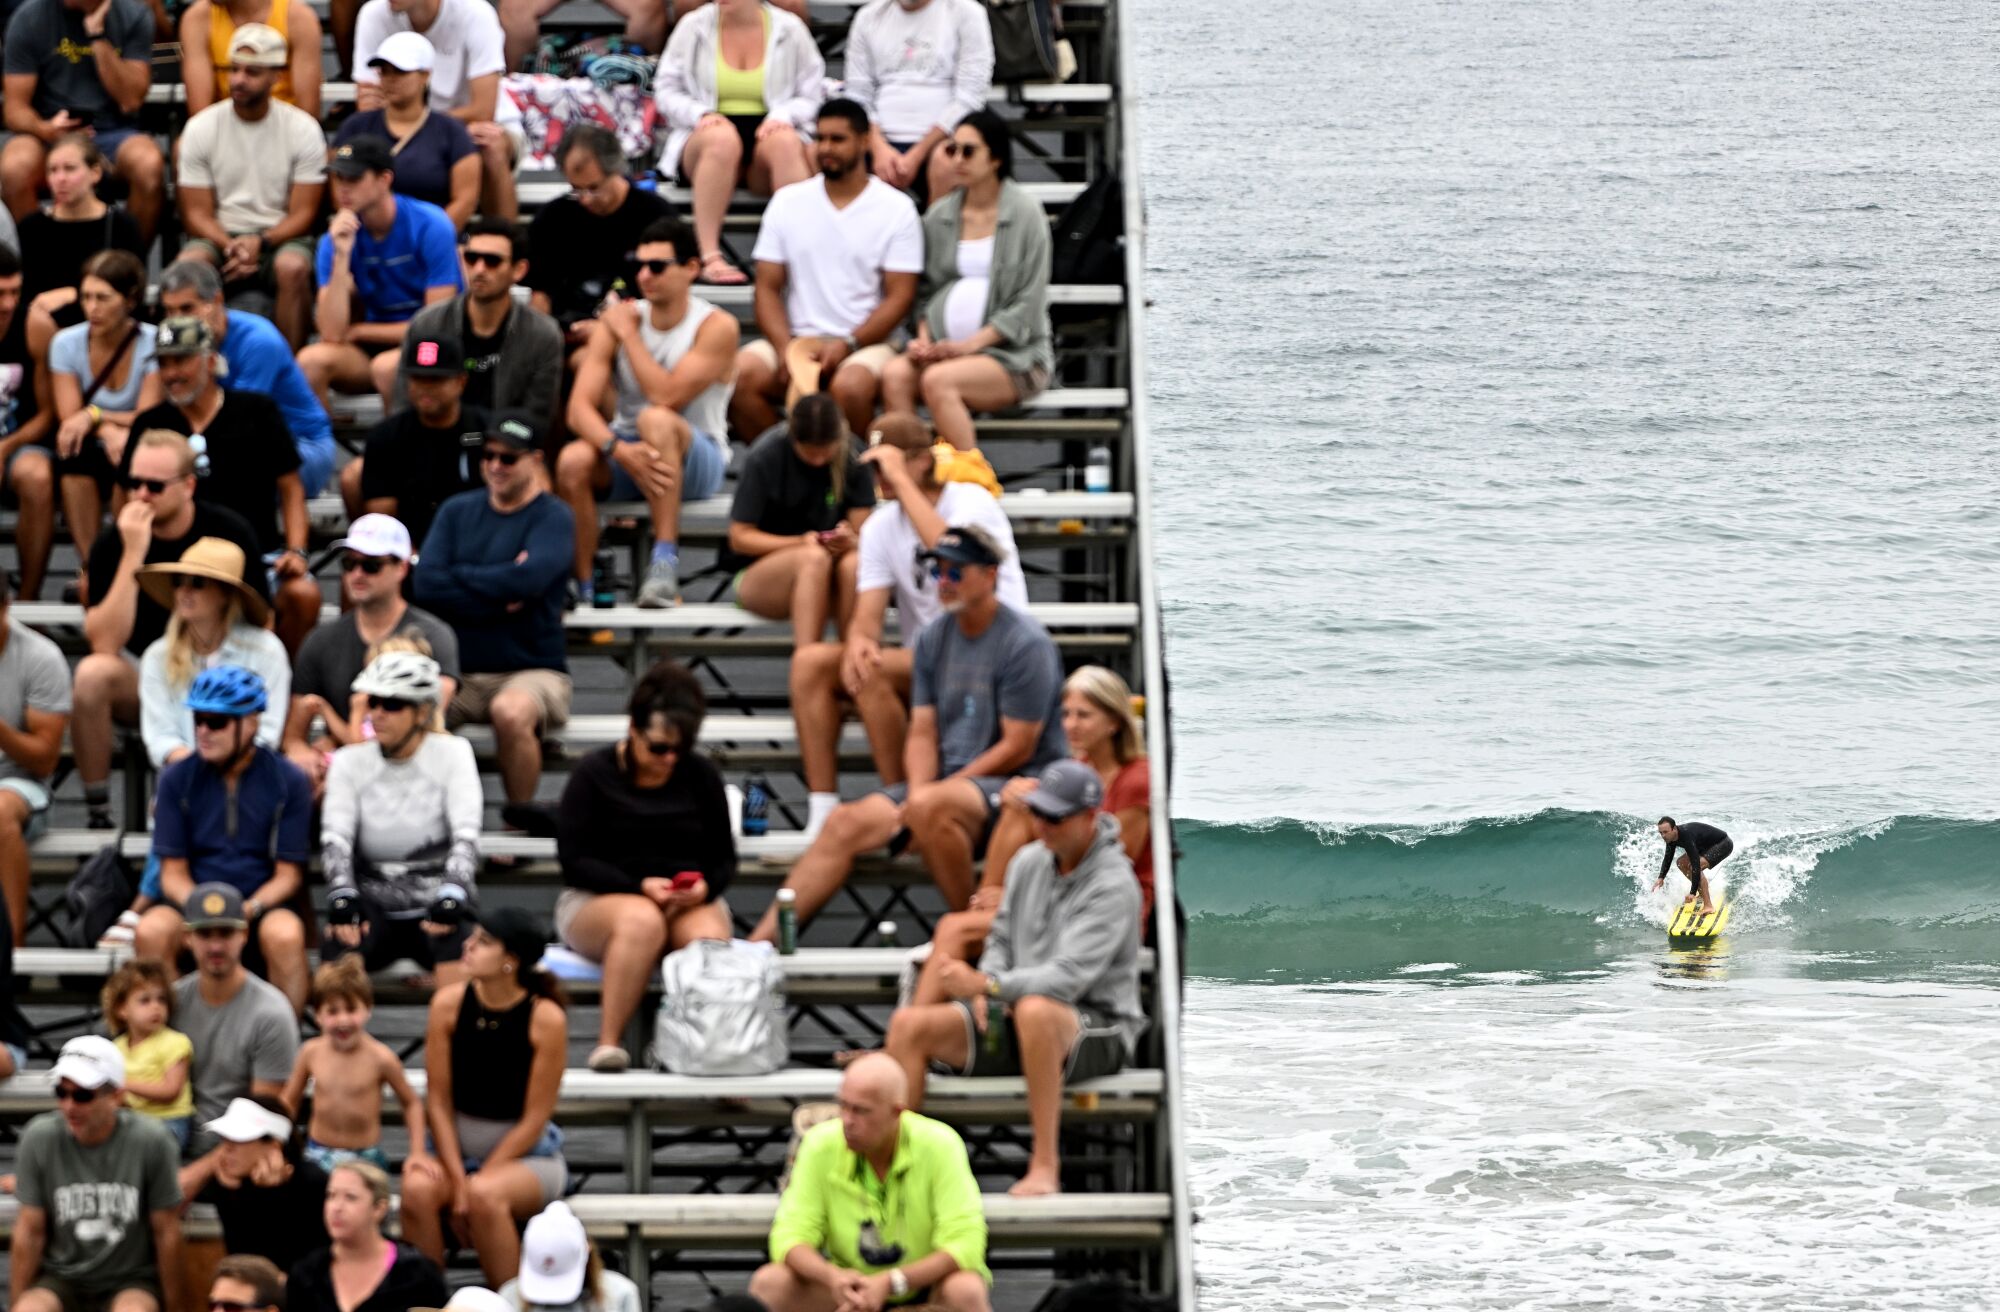 A surfer rides a wave as the crowd watches the AVP Manhattan Beach Open.